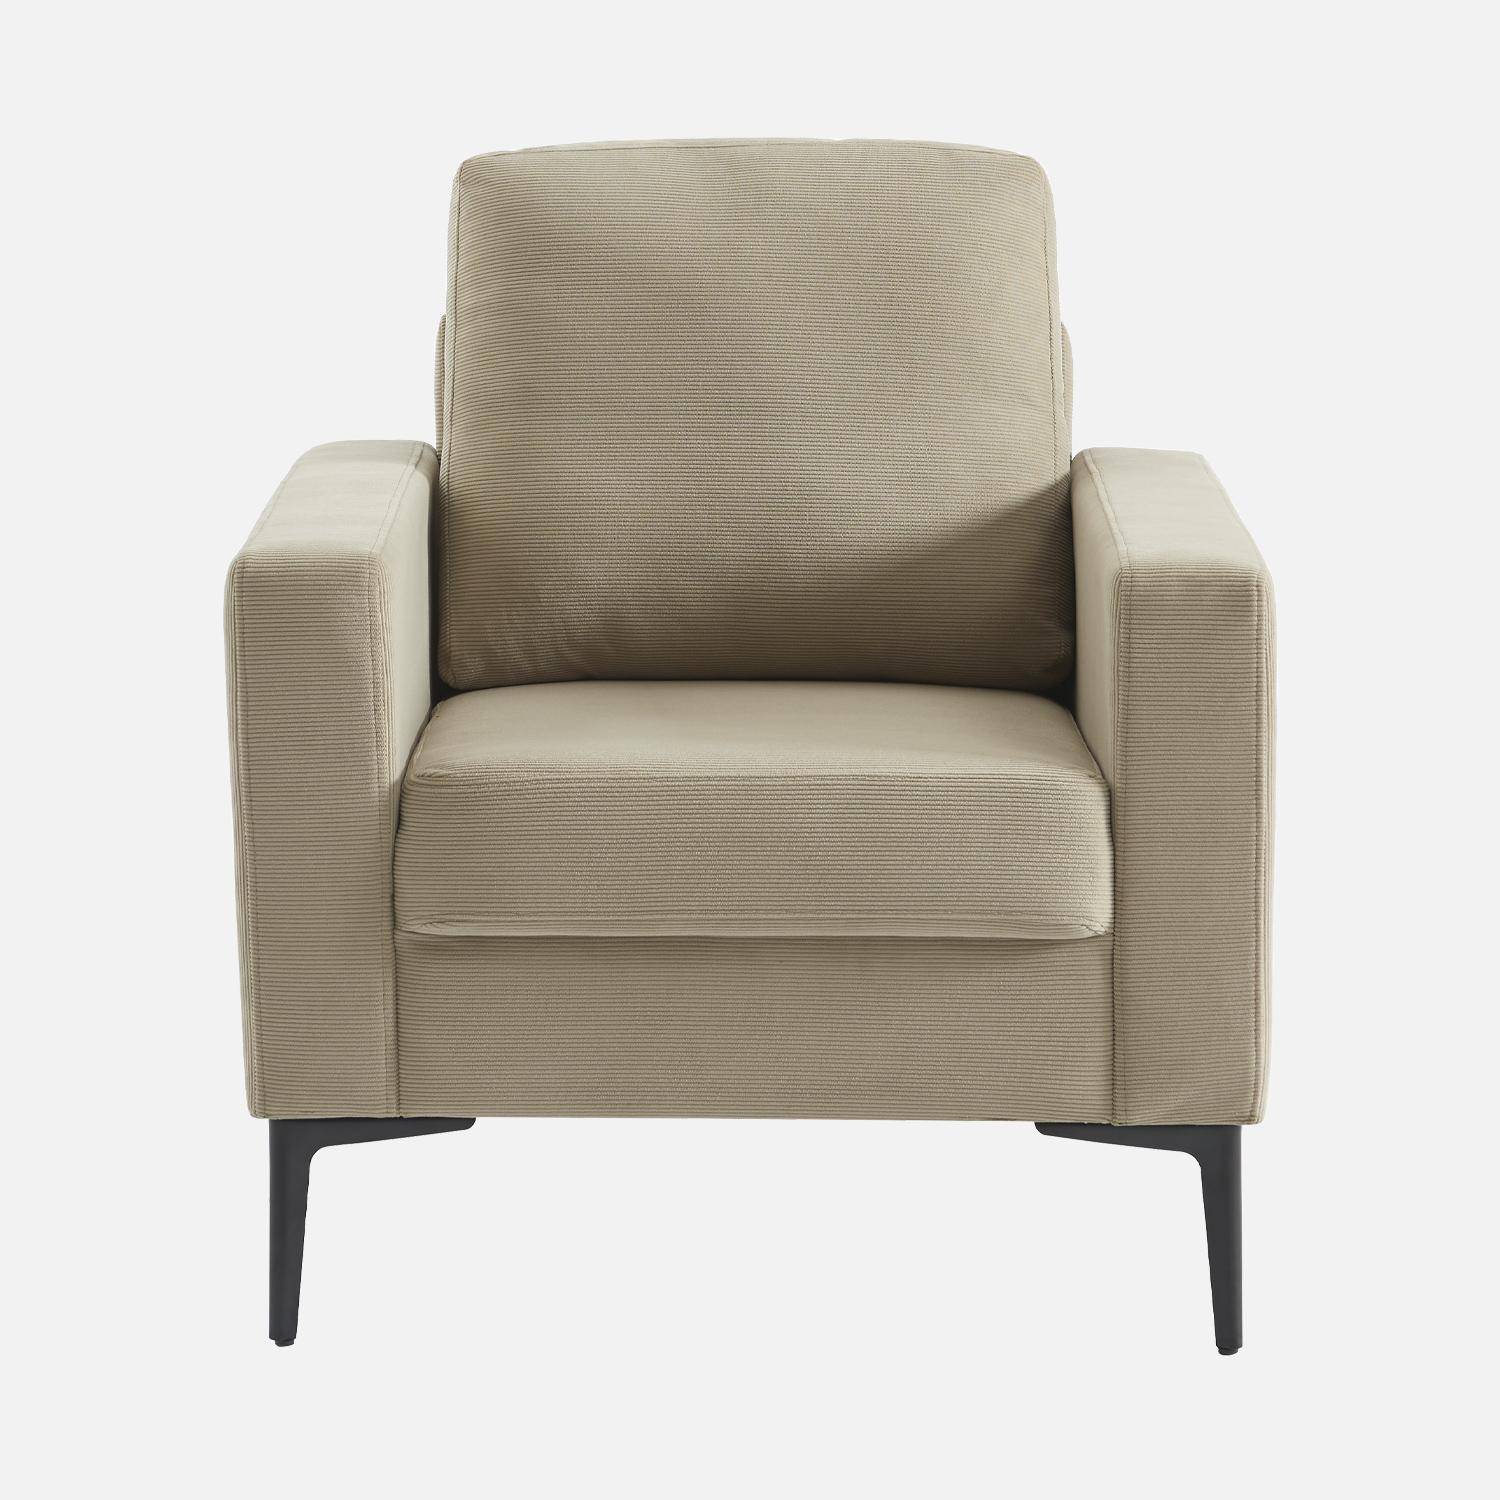 Sessel mit Kord-Bezug - Beige grau - Bjorn - mit geraden Metallfüßen,sweeek,Photo4